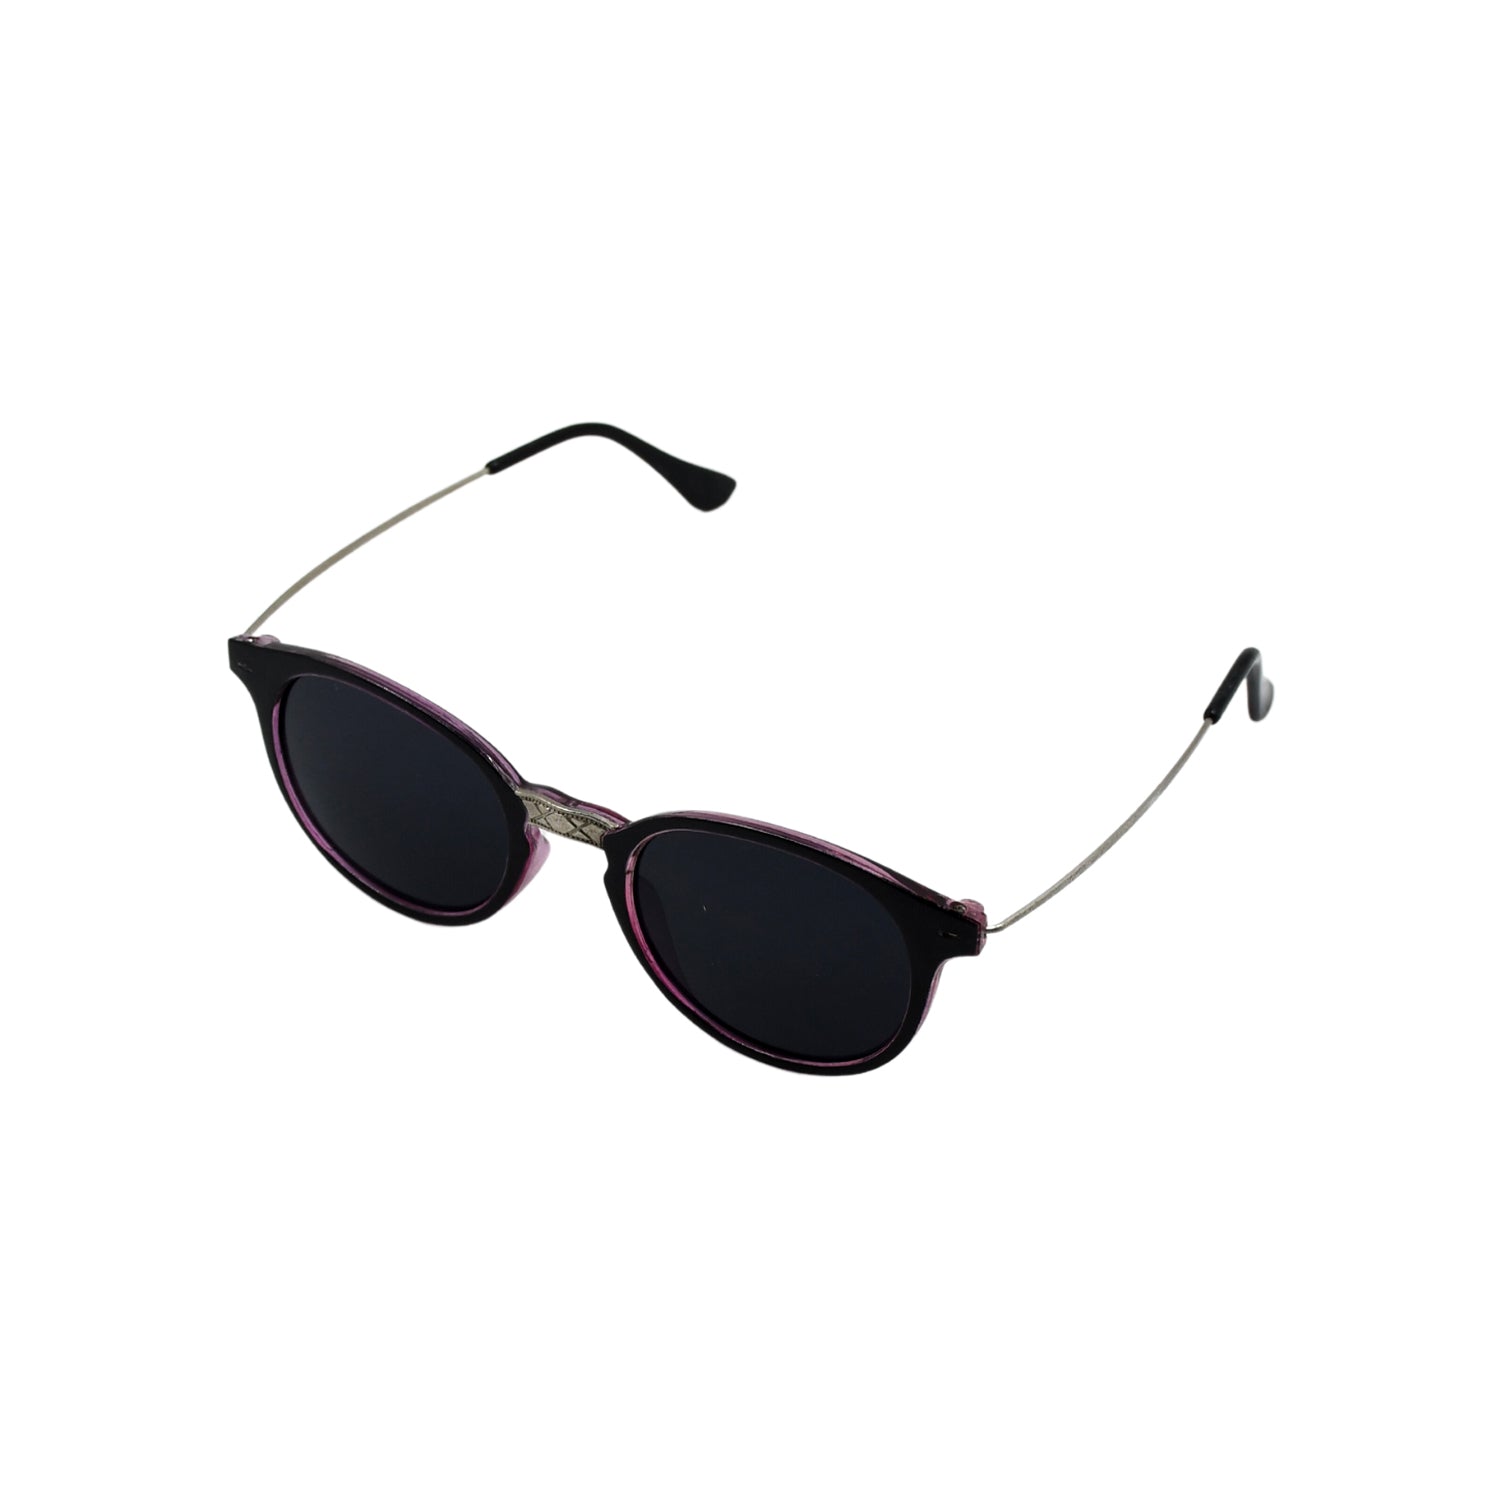 7760 Sunglasses Light Weight & Classic Style Frame Sunglasses For Men , Women , & Boys Use Glasses